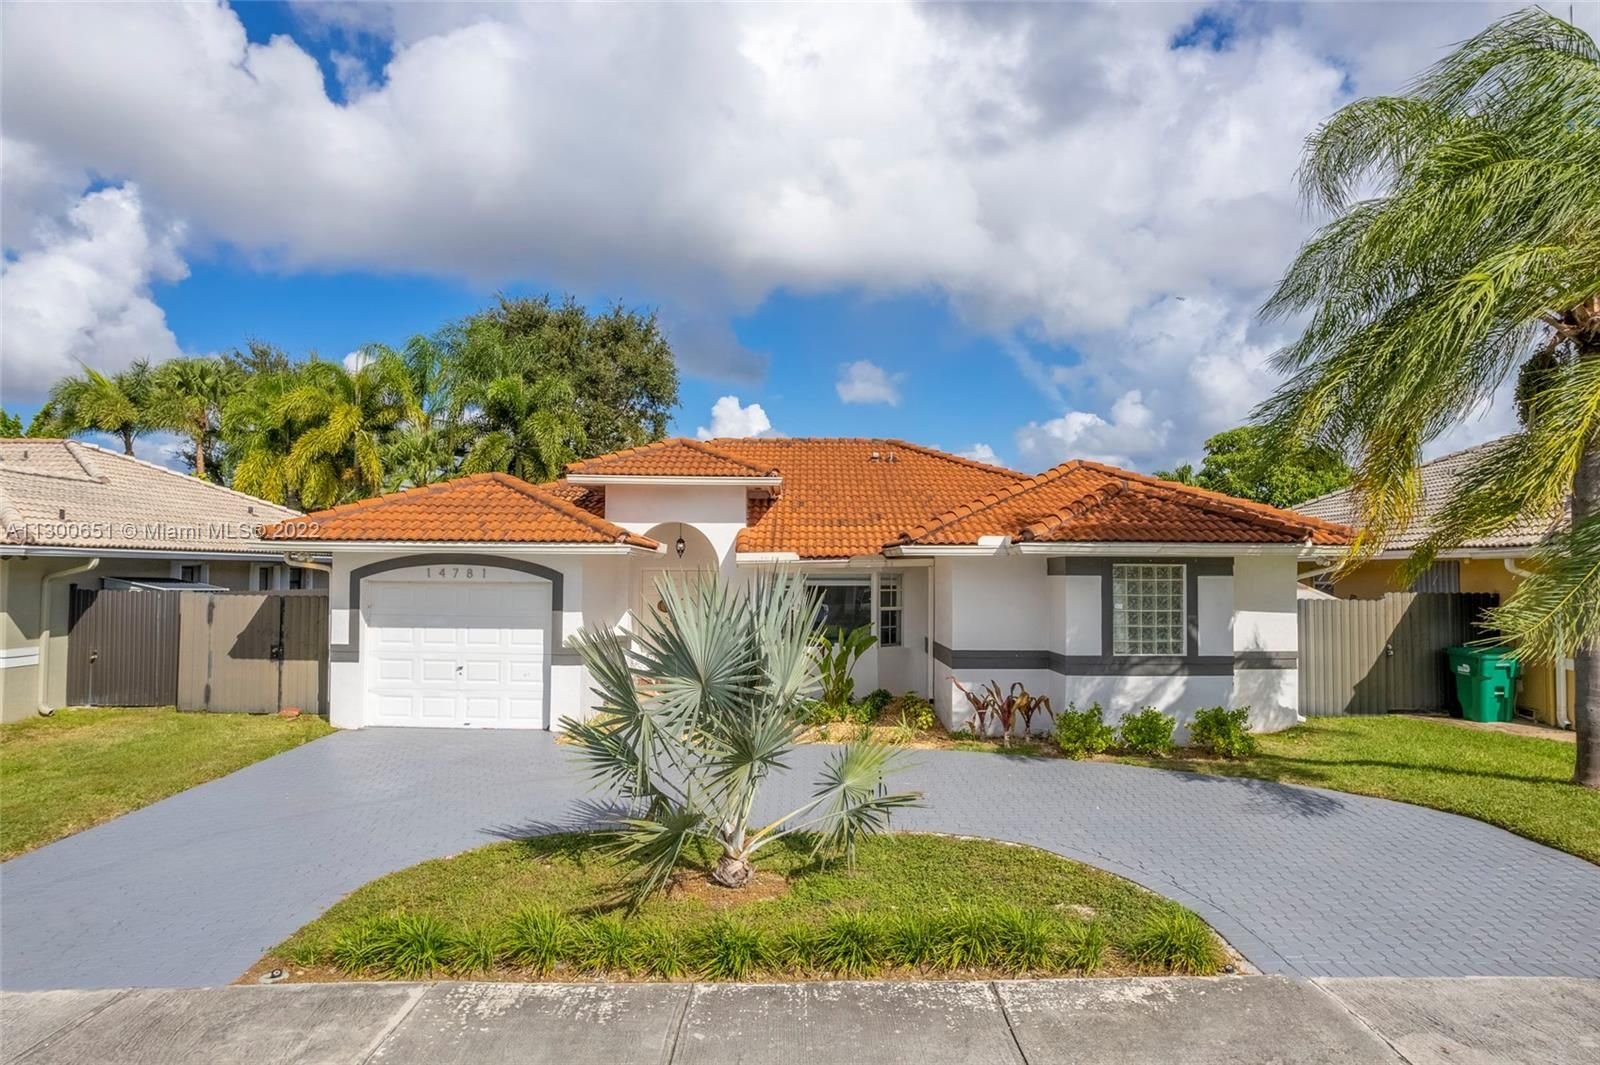 Real estate property located at 14781 176th Ter, Miami-Dade County, Miami, FL